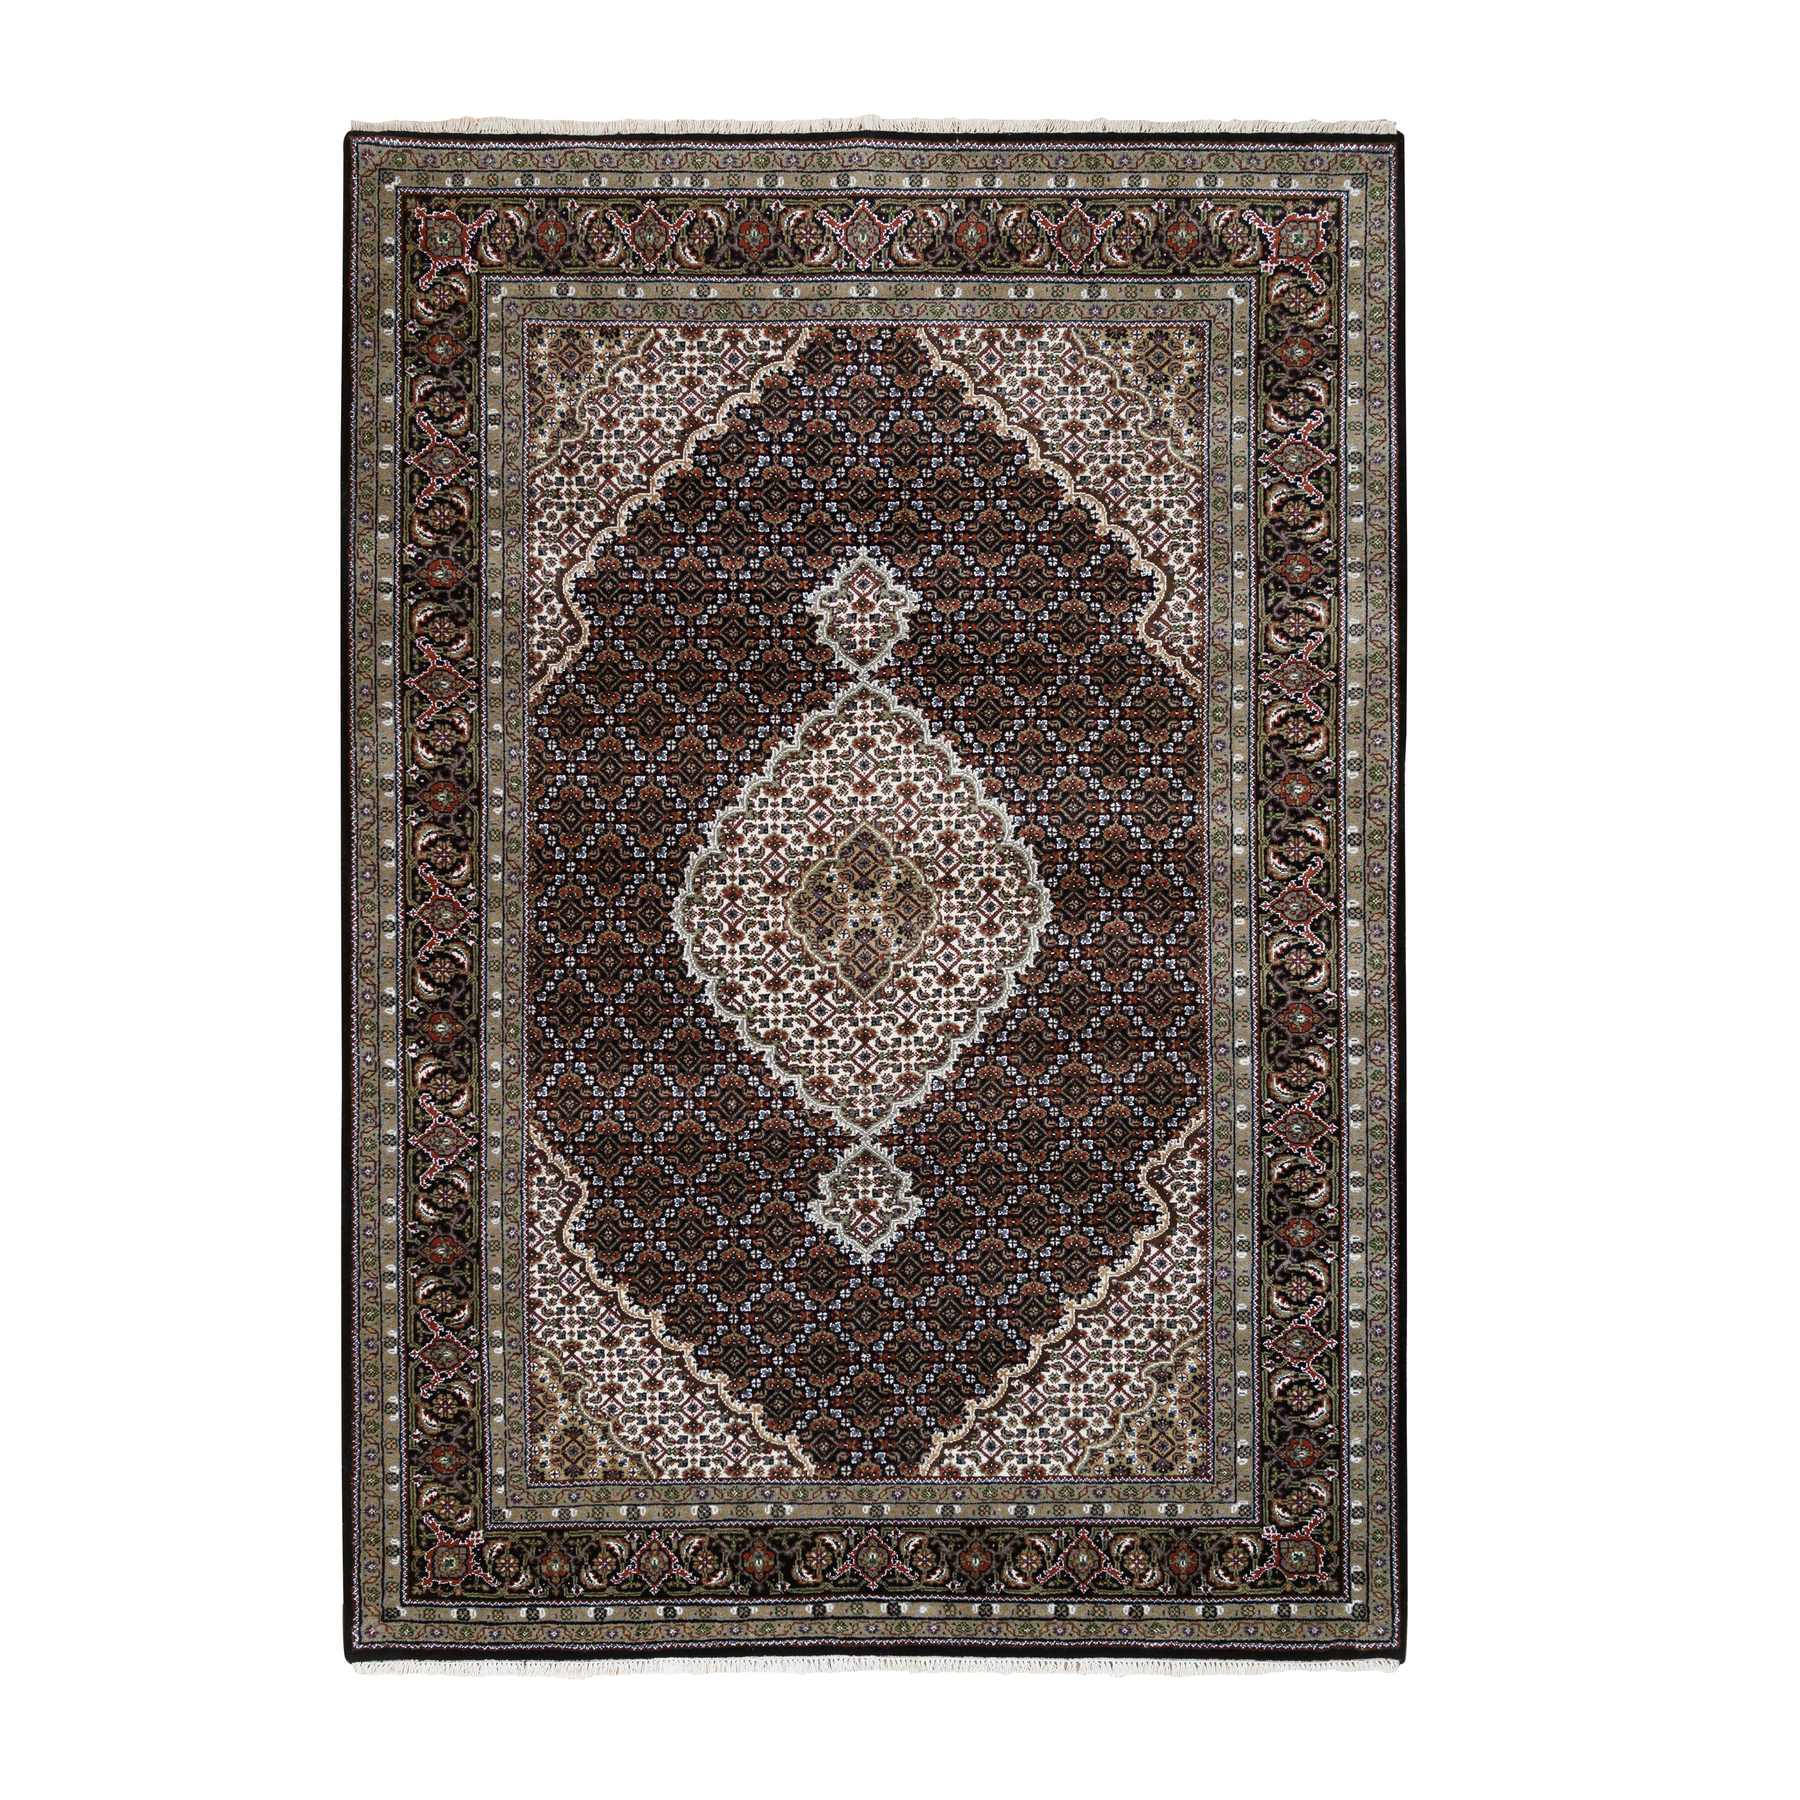 6'x8'8" Hand Woven Rich Black Tabriz Mahi with Fish Medallion Design Wool and Silk 175 KPSI Oriental Rug 